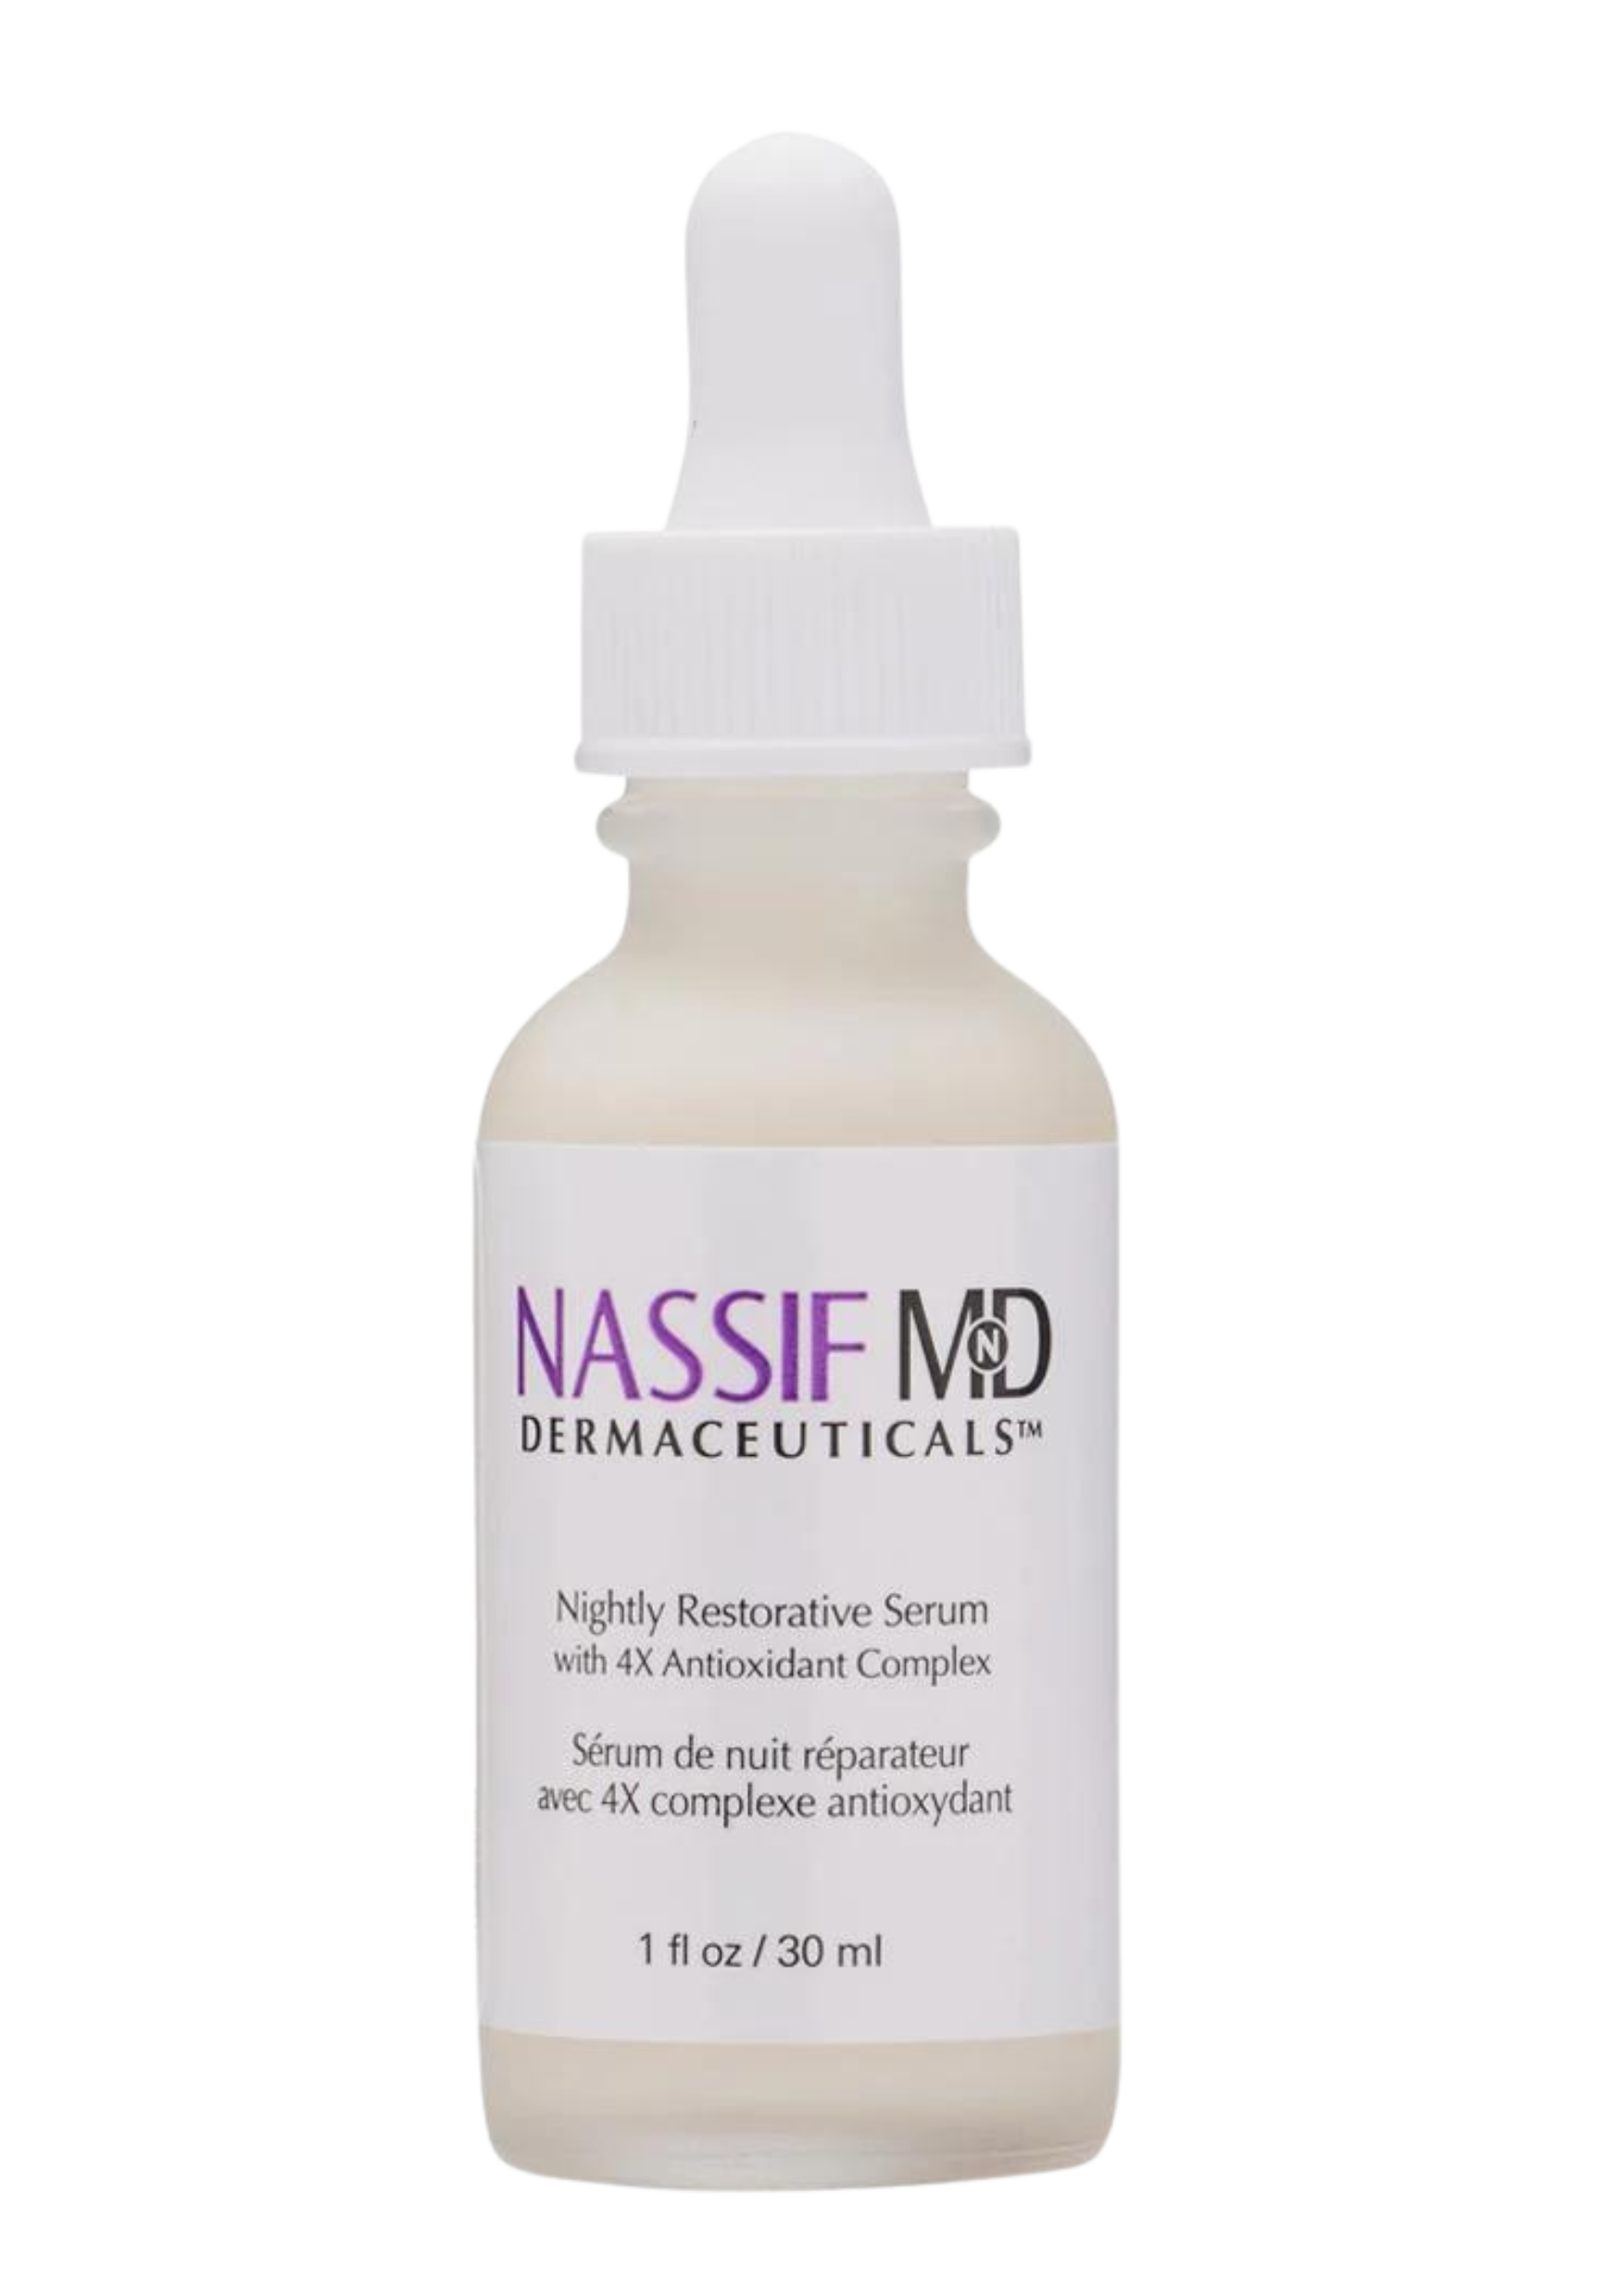 Nassif MD® Nightly Restorative Serum with 4x Antioxidant Complex